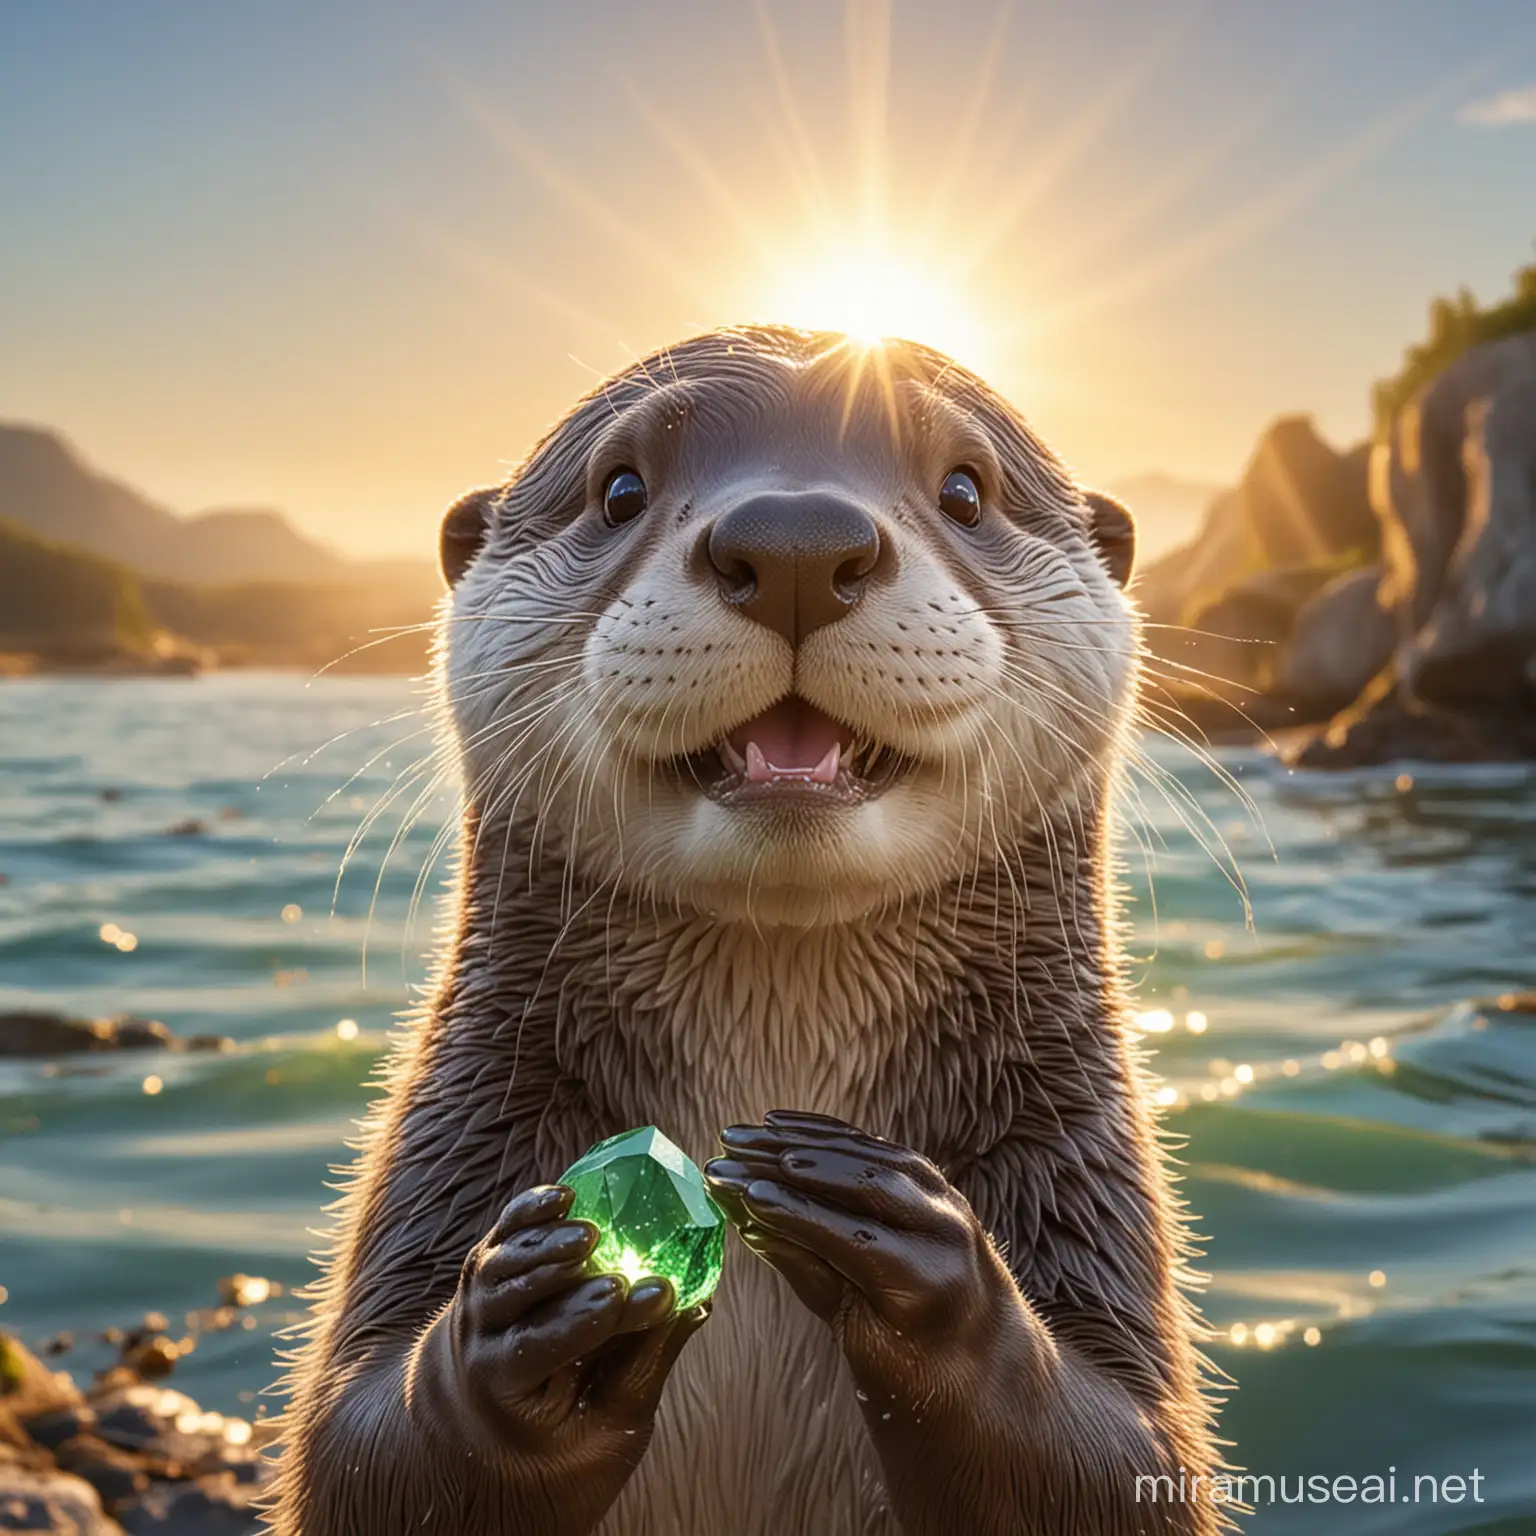 Joyful OtterGirl Examining Radiant Green Crystal Outdoors